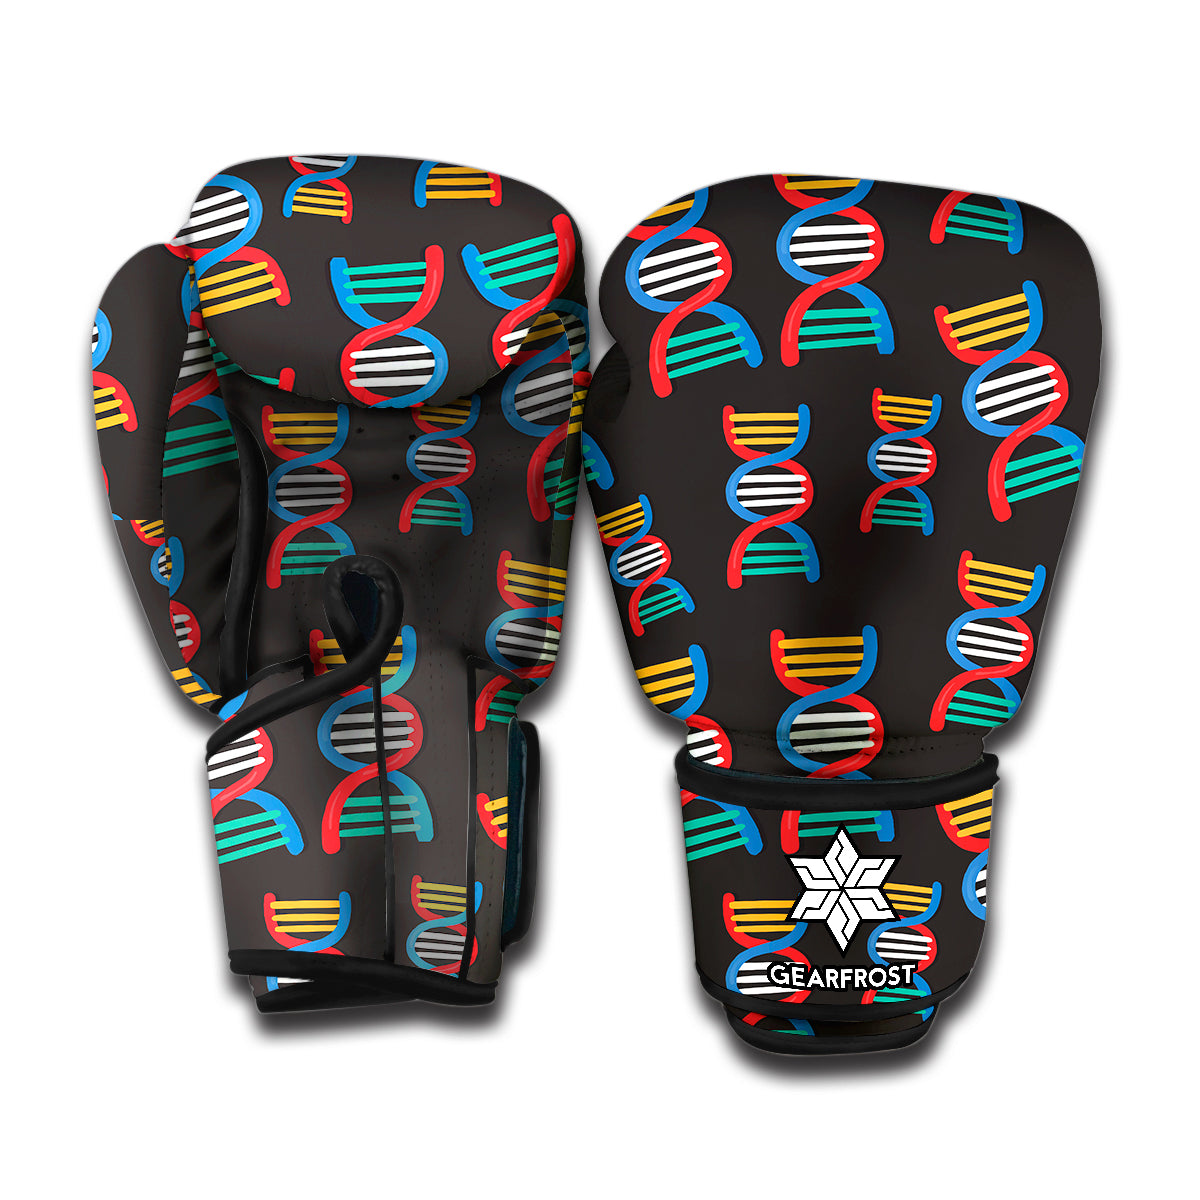 DNA Strands Pattern Print Boxing Gloves